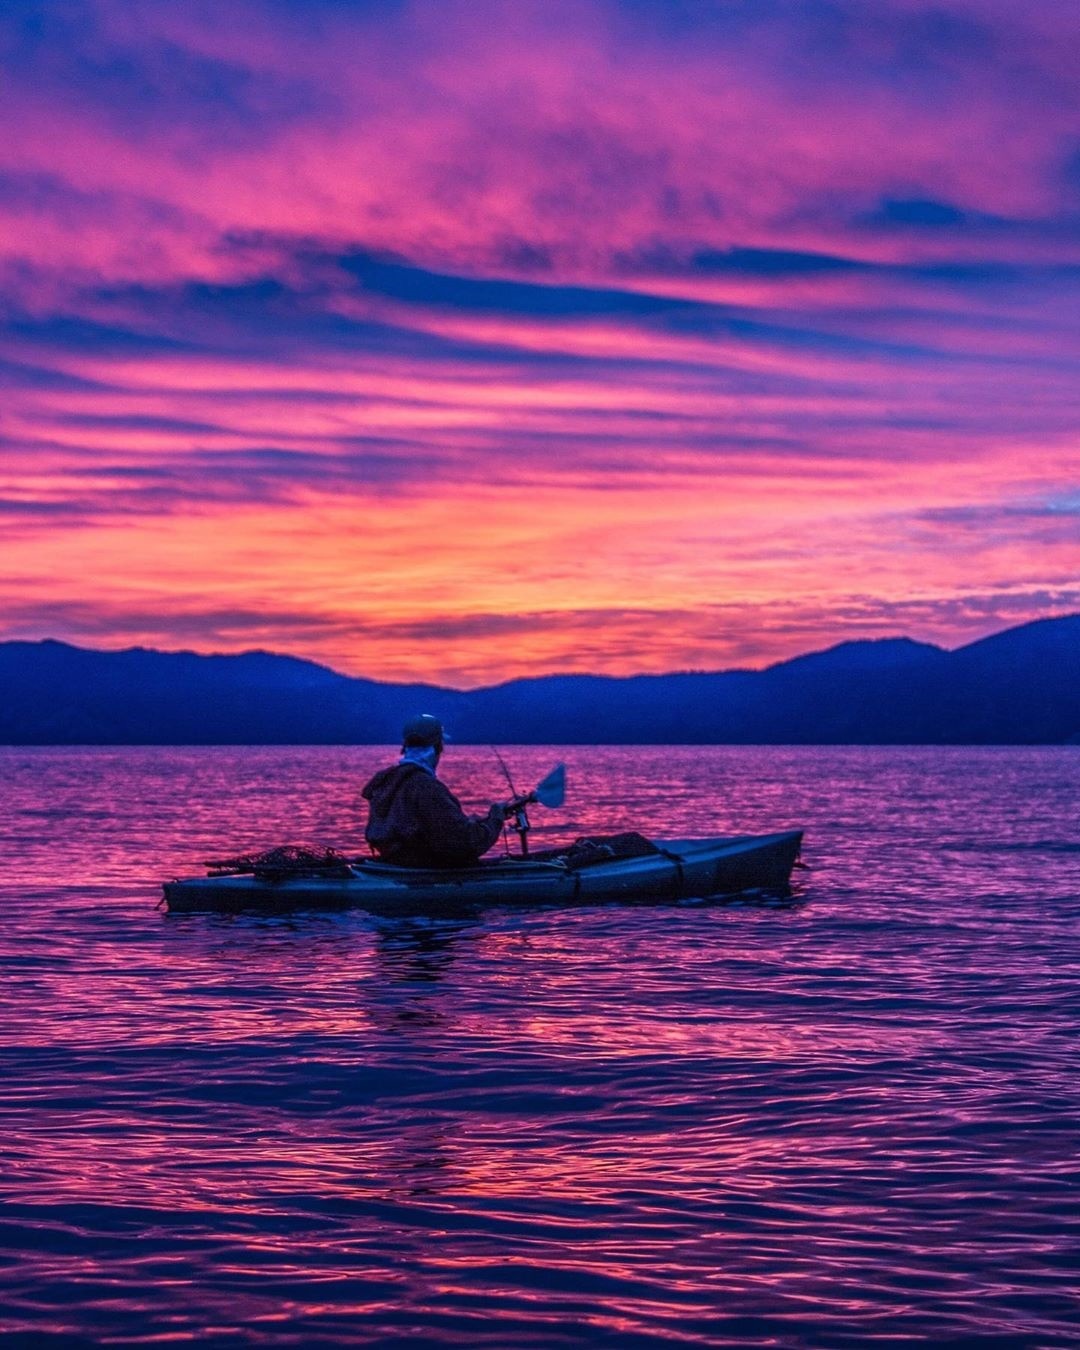  stunning photo captured near the west shore of Lake Tahoe